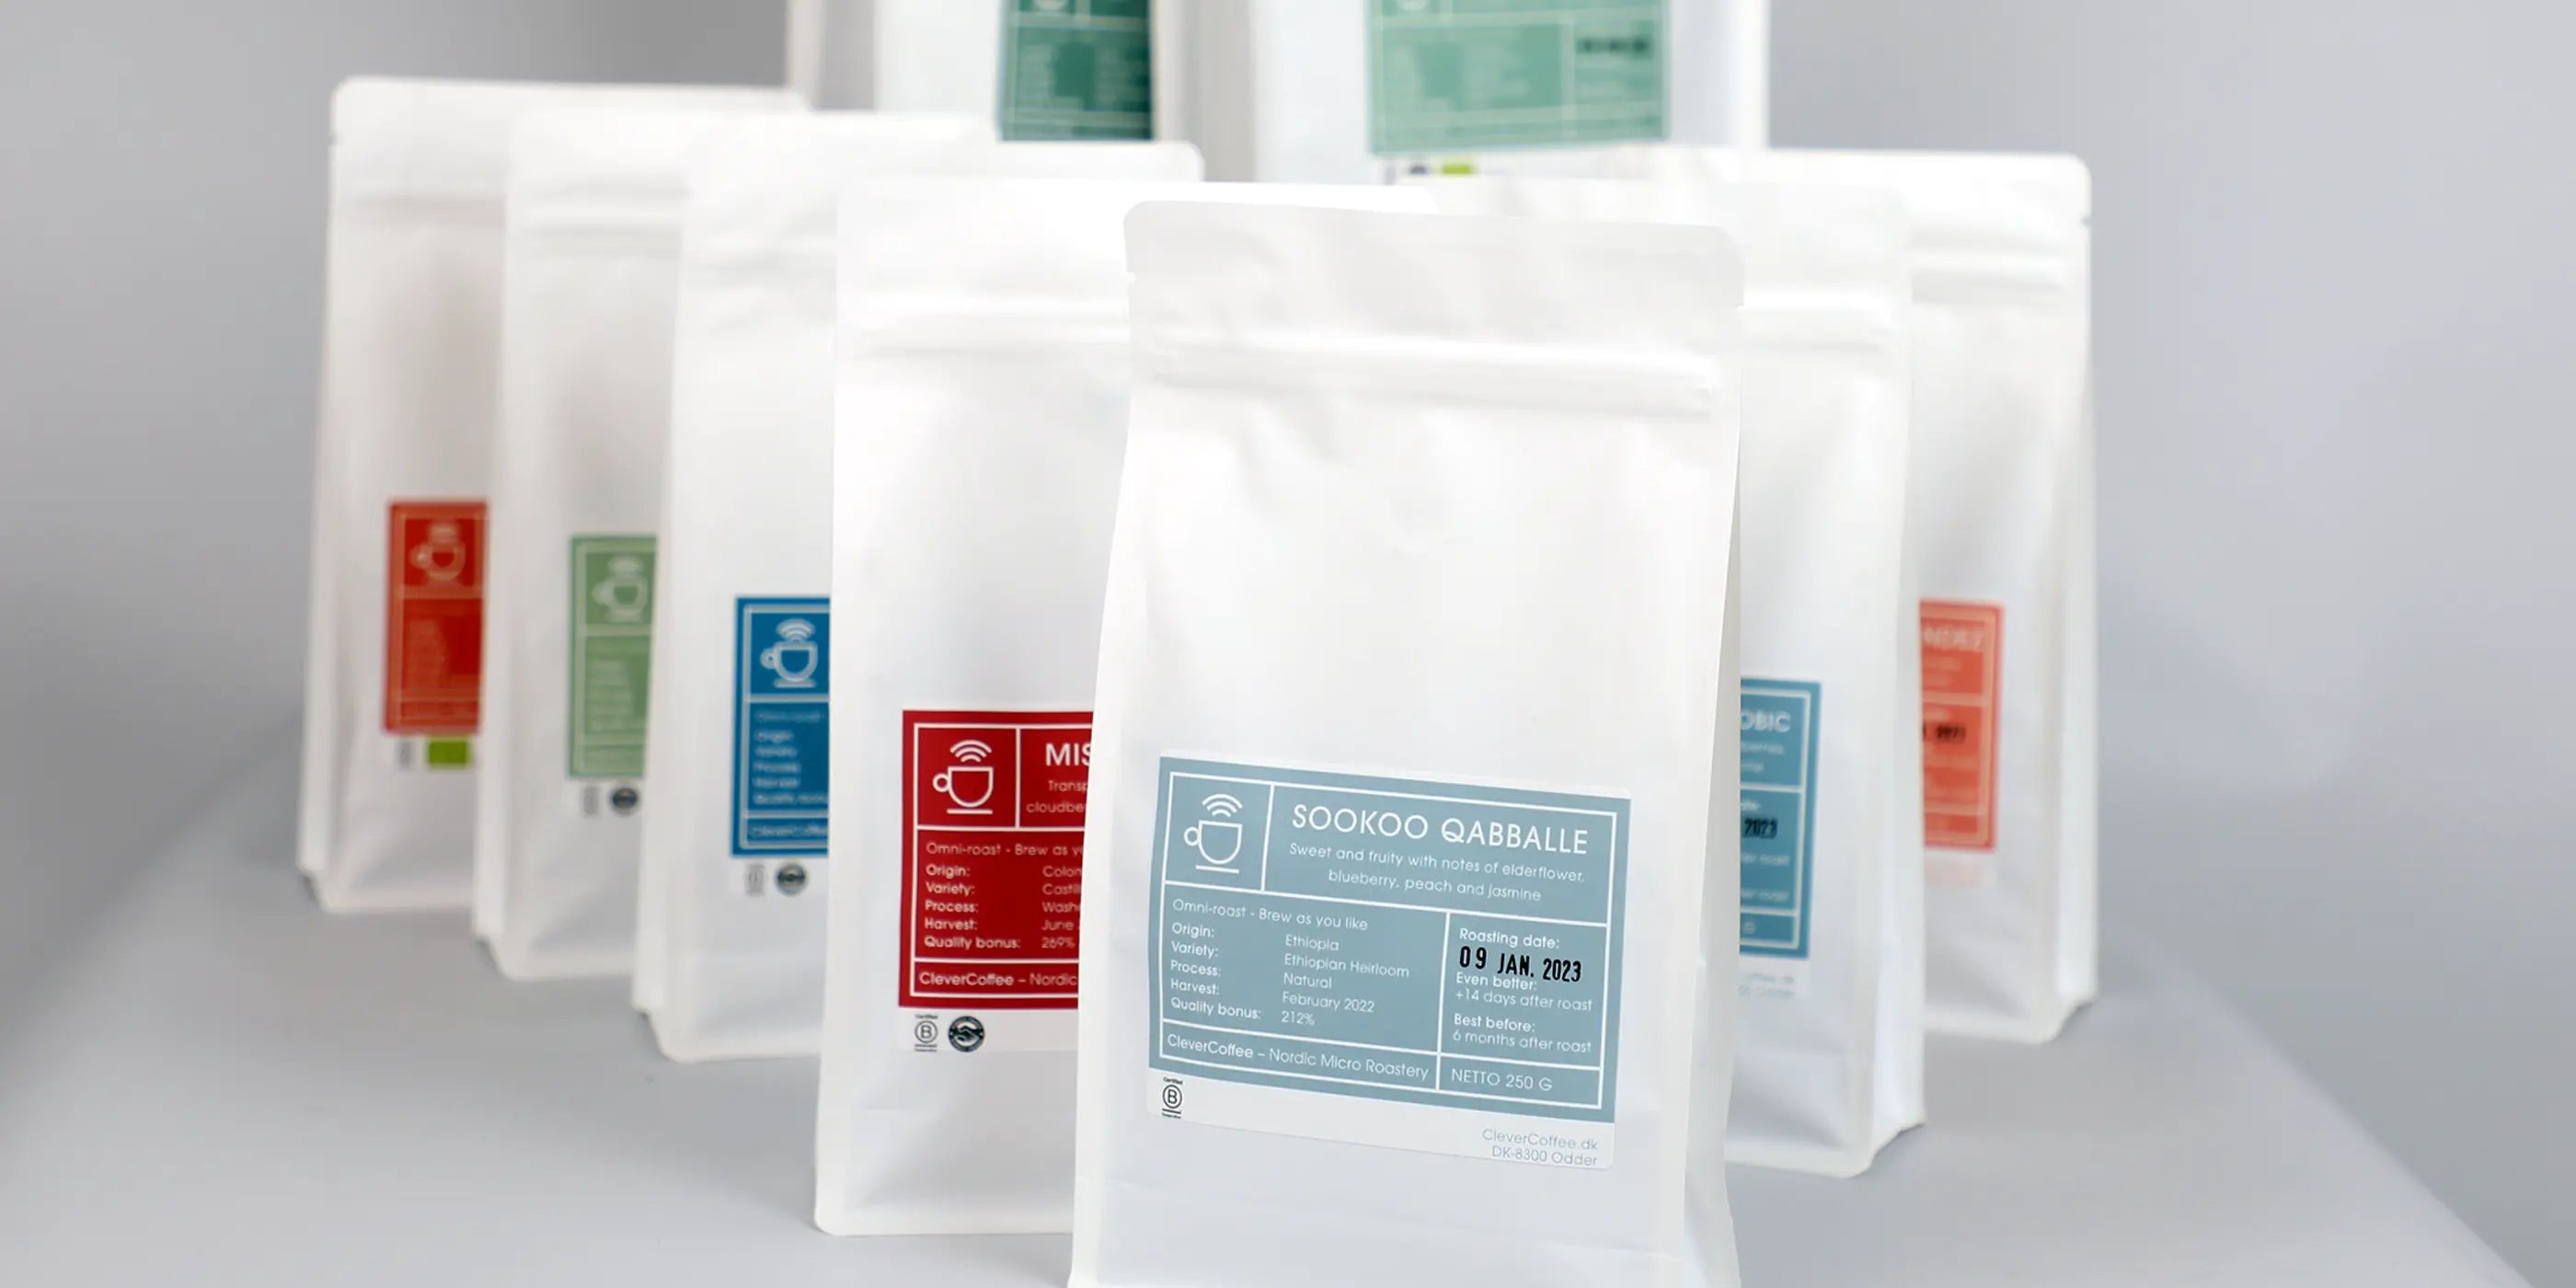 9 forskellige kaffeposer, clevercoffee kaffesortiment 